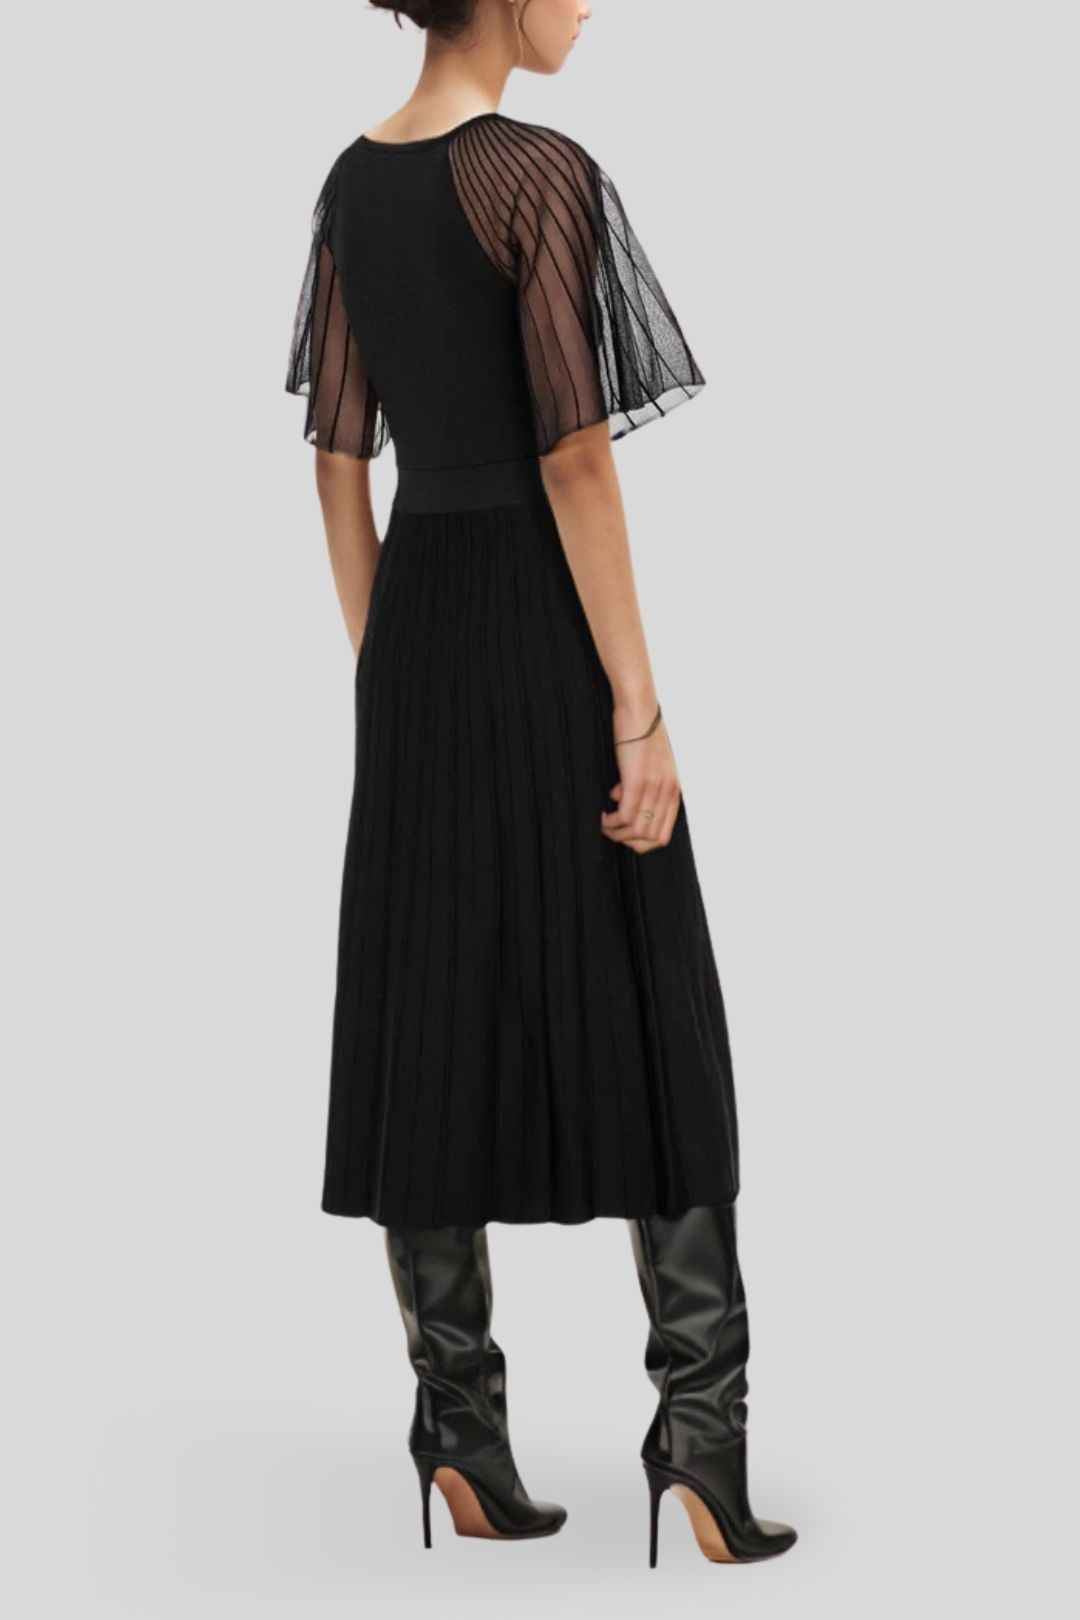  Veronika Maine Sheer Sleeve Pleated Knit Dress in Black Side